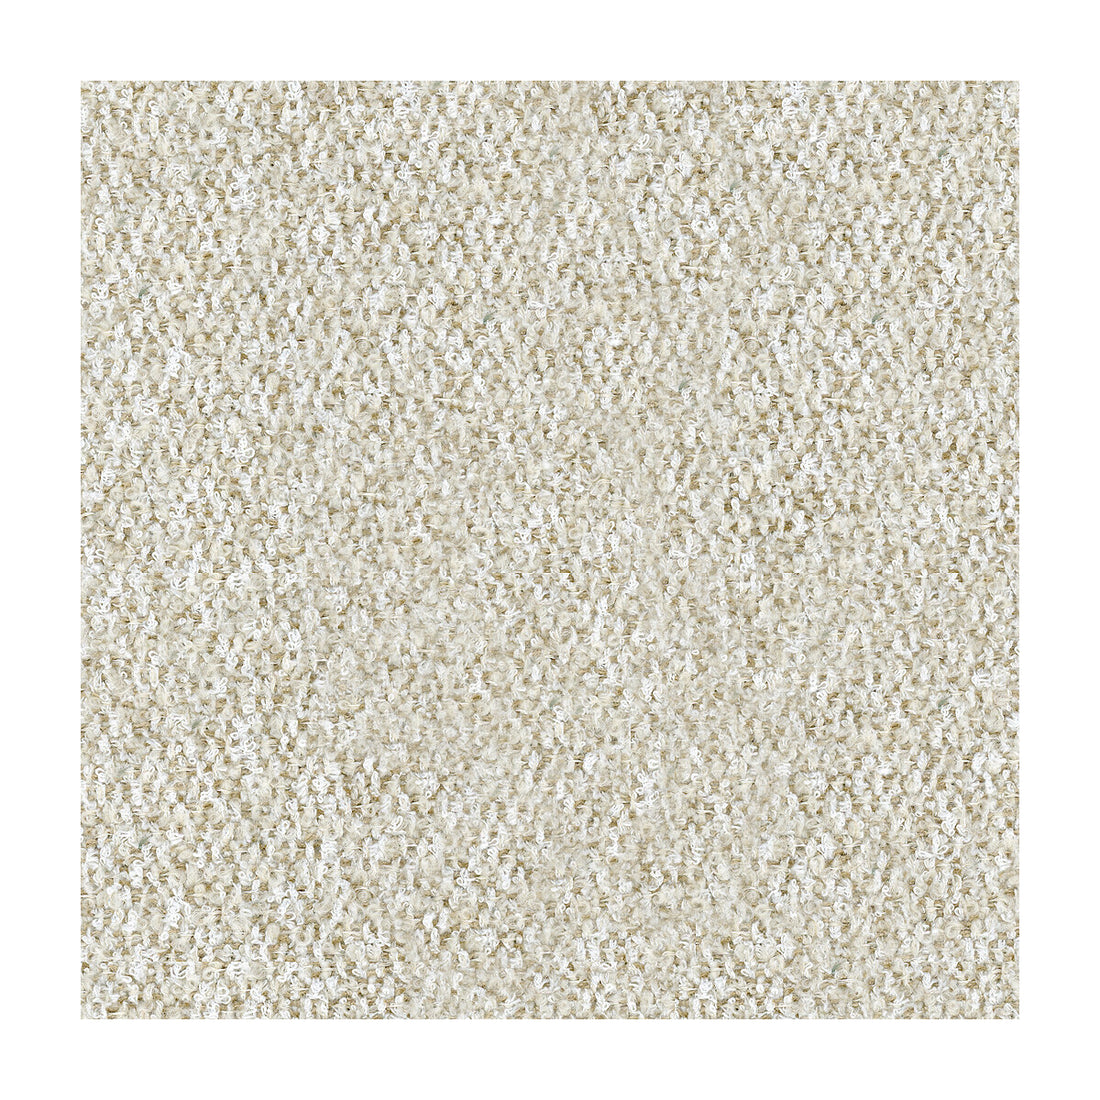 Tessellate fabric in ivory/beige color - pattern GWF-3527.116.0 - by Lee Jofa Modern in the Kelly Wearstler III collection